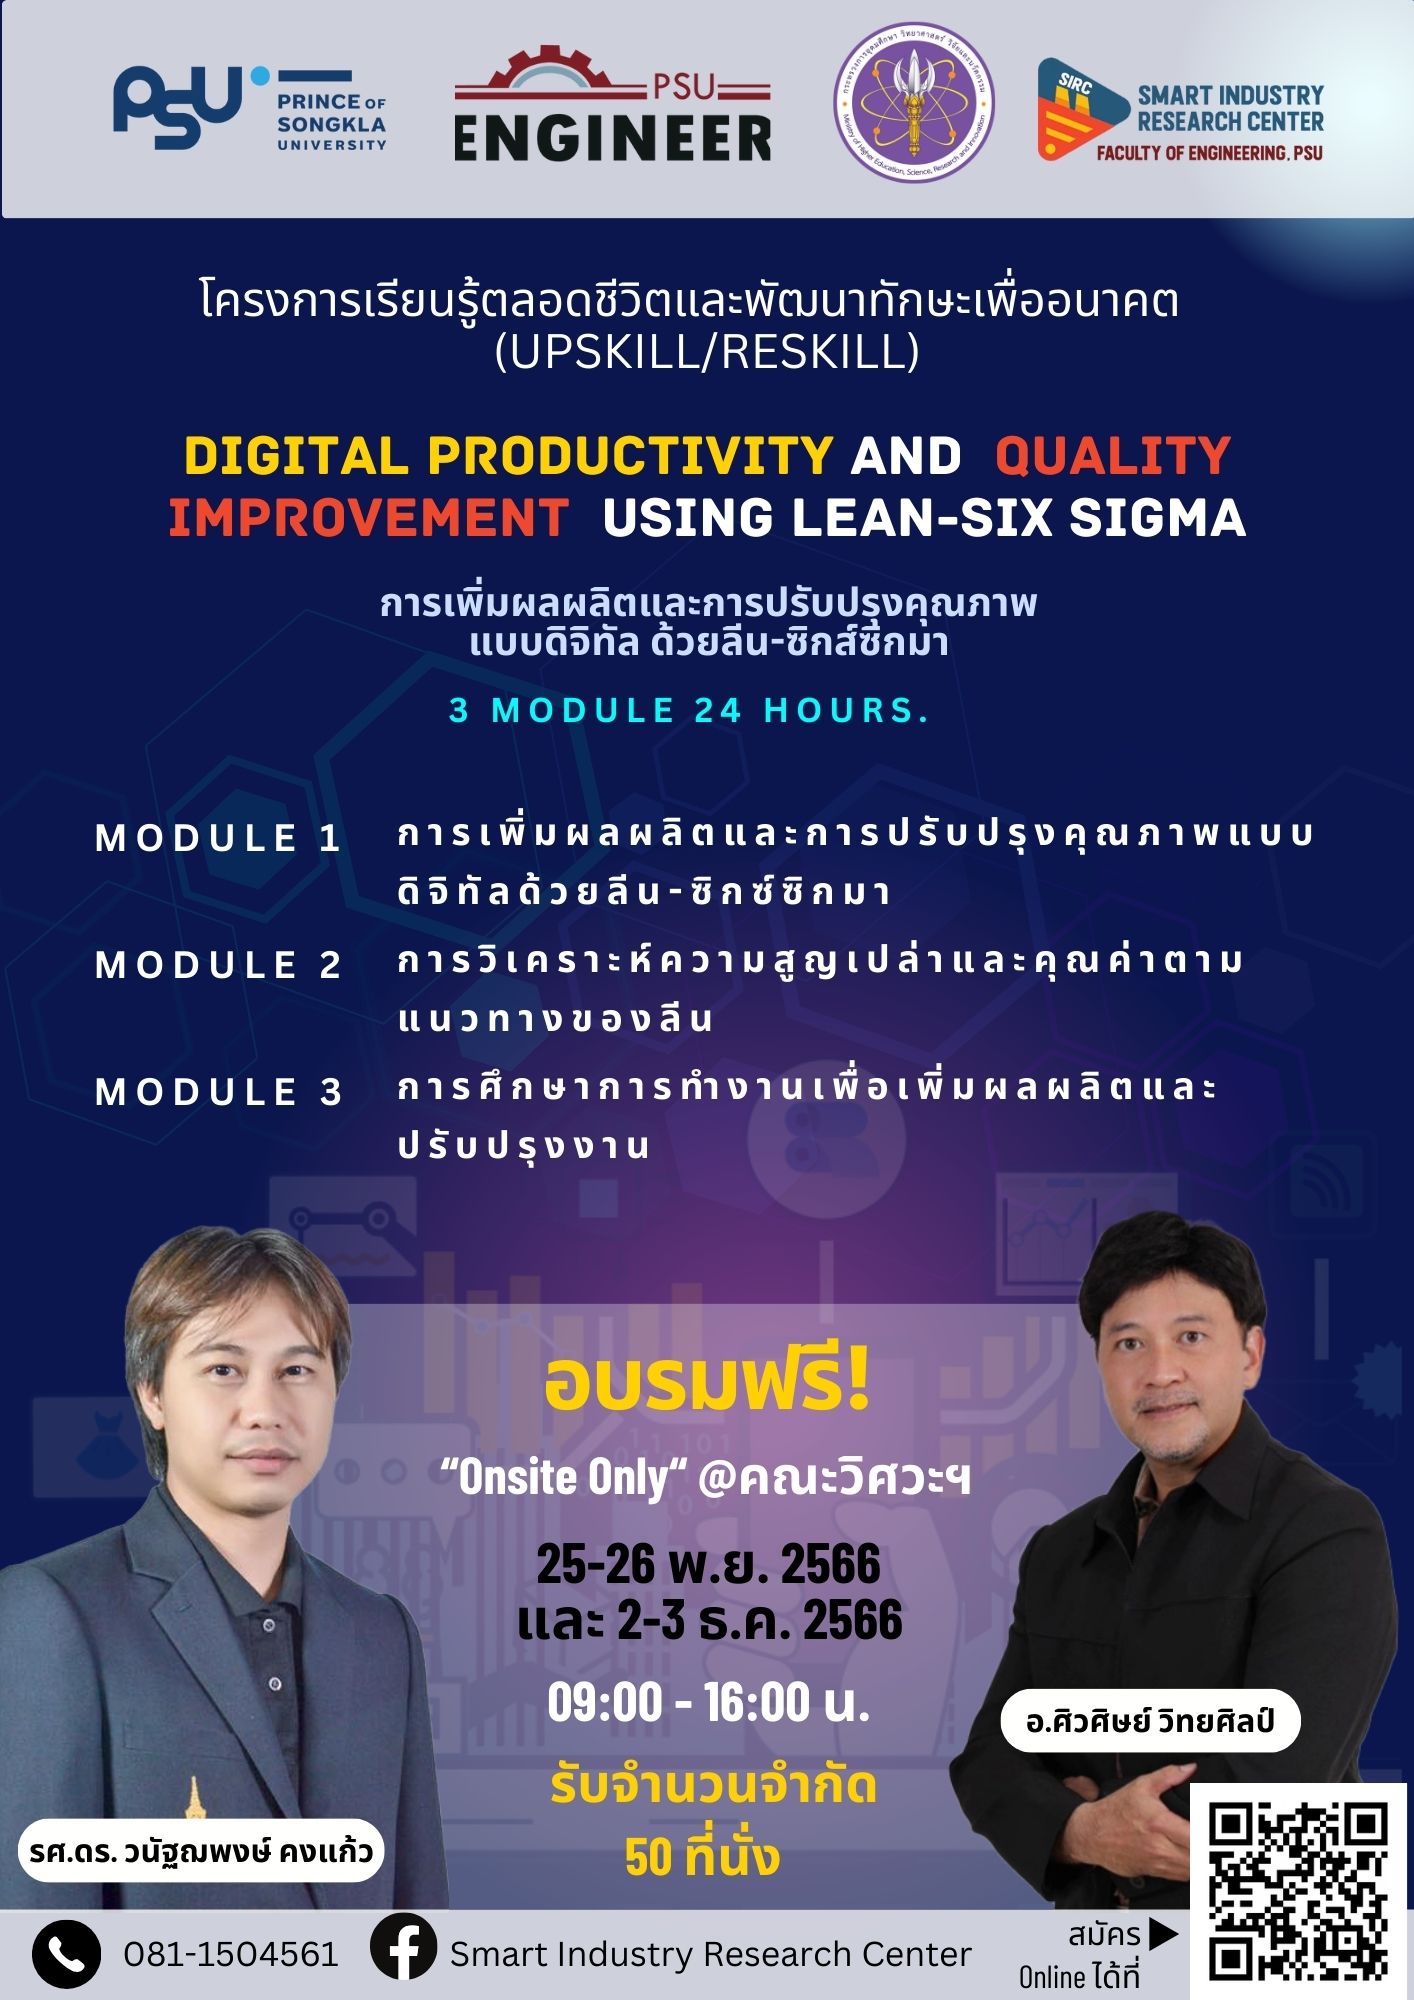 Digital productivity and quality improvement using lean-six sigma